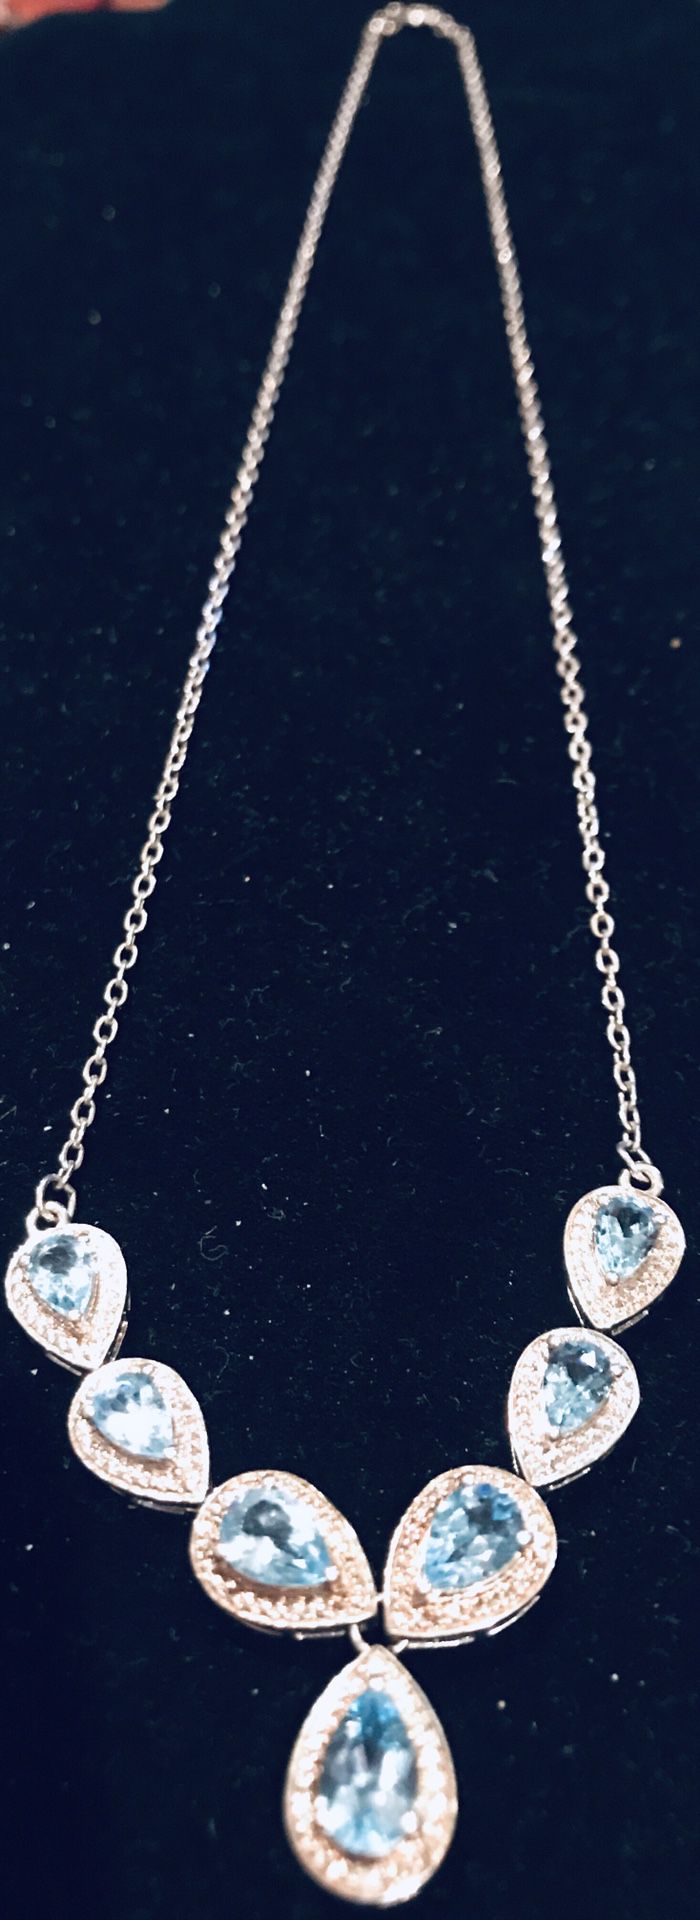 Stunning teardrop topaz necklace, sterling silver